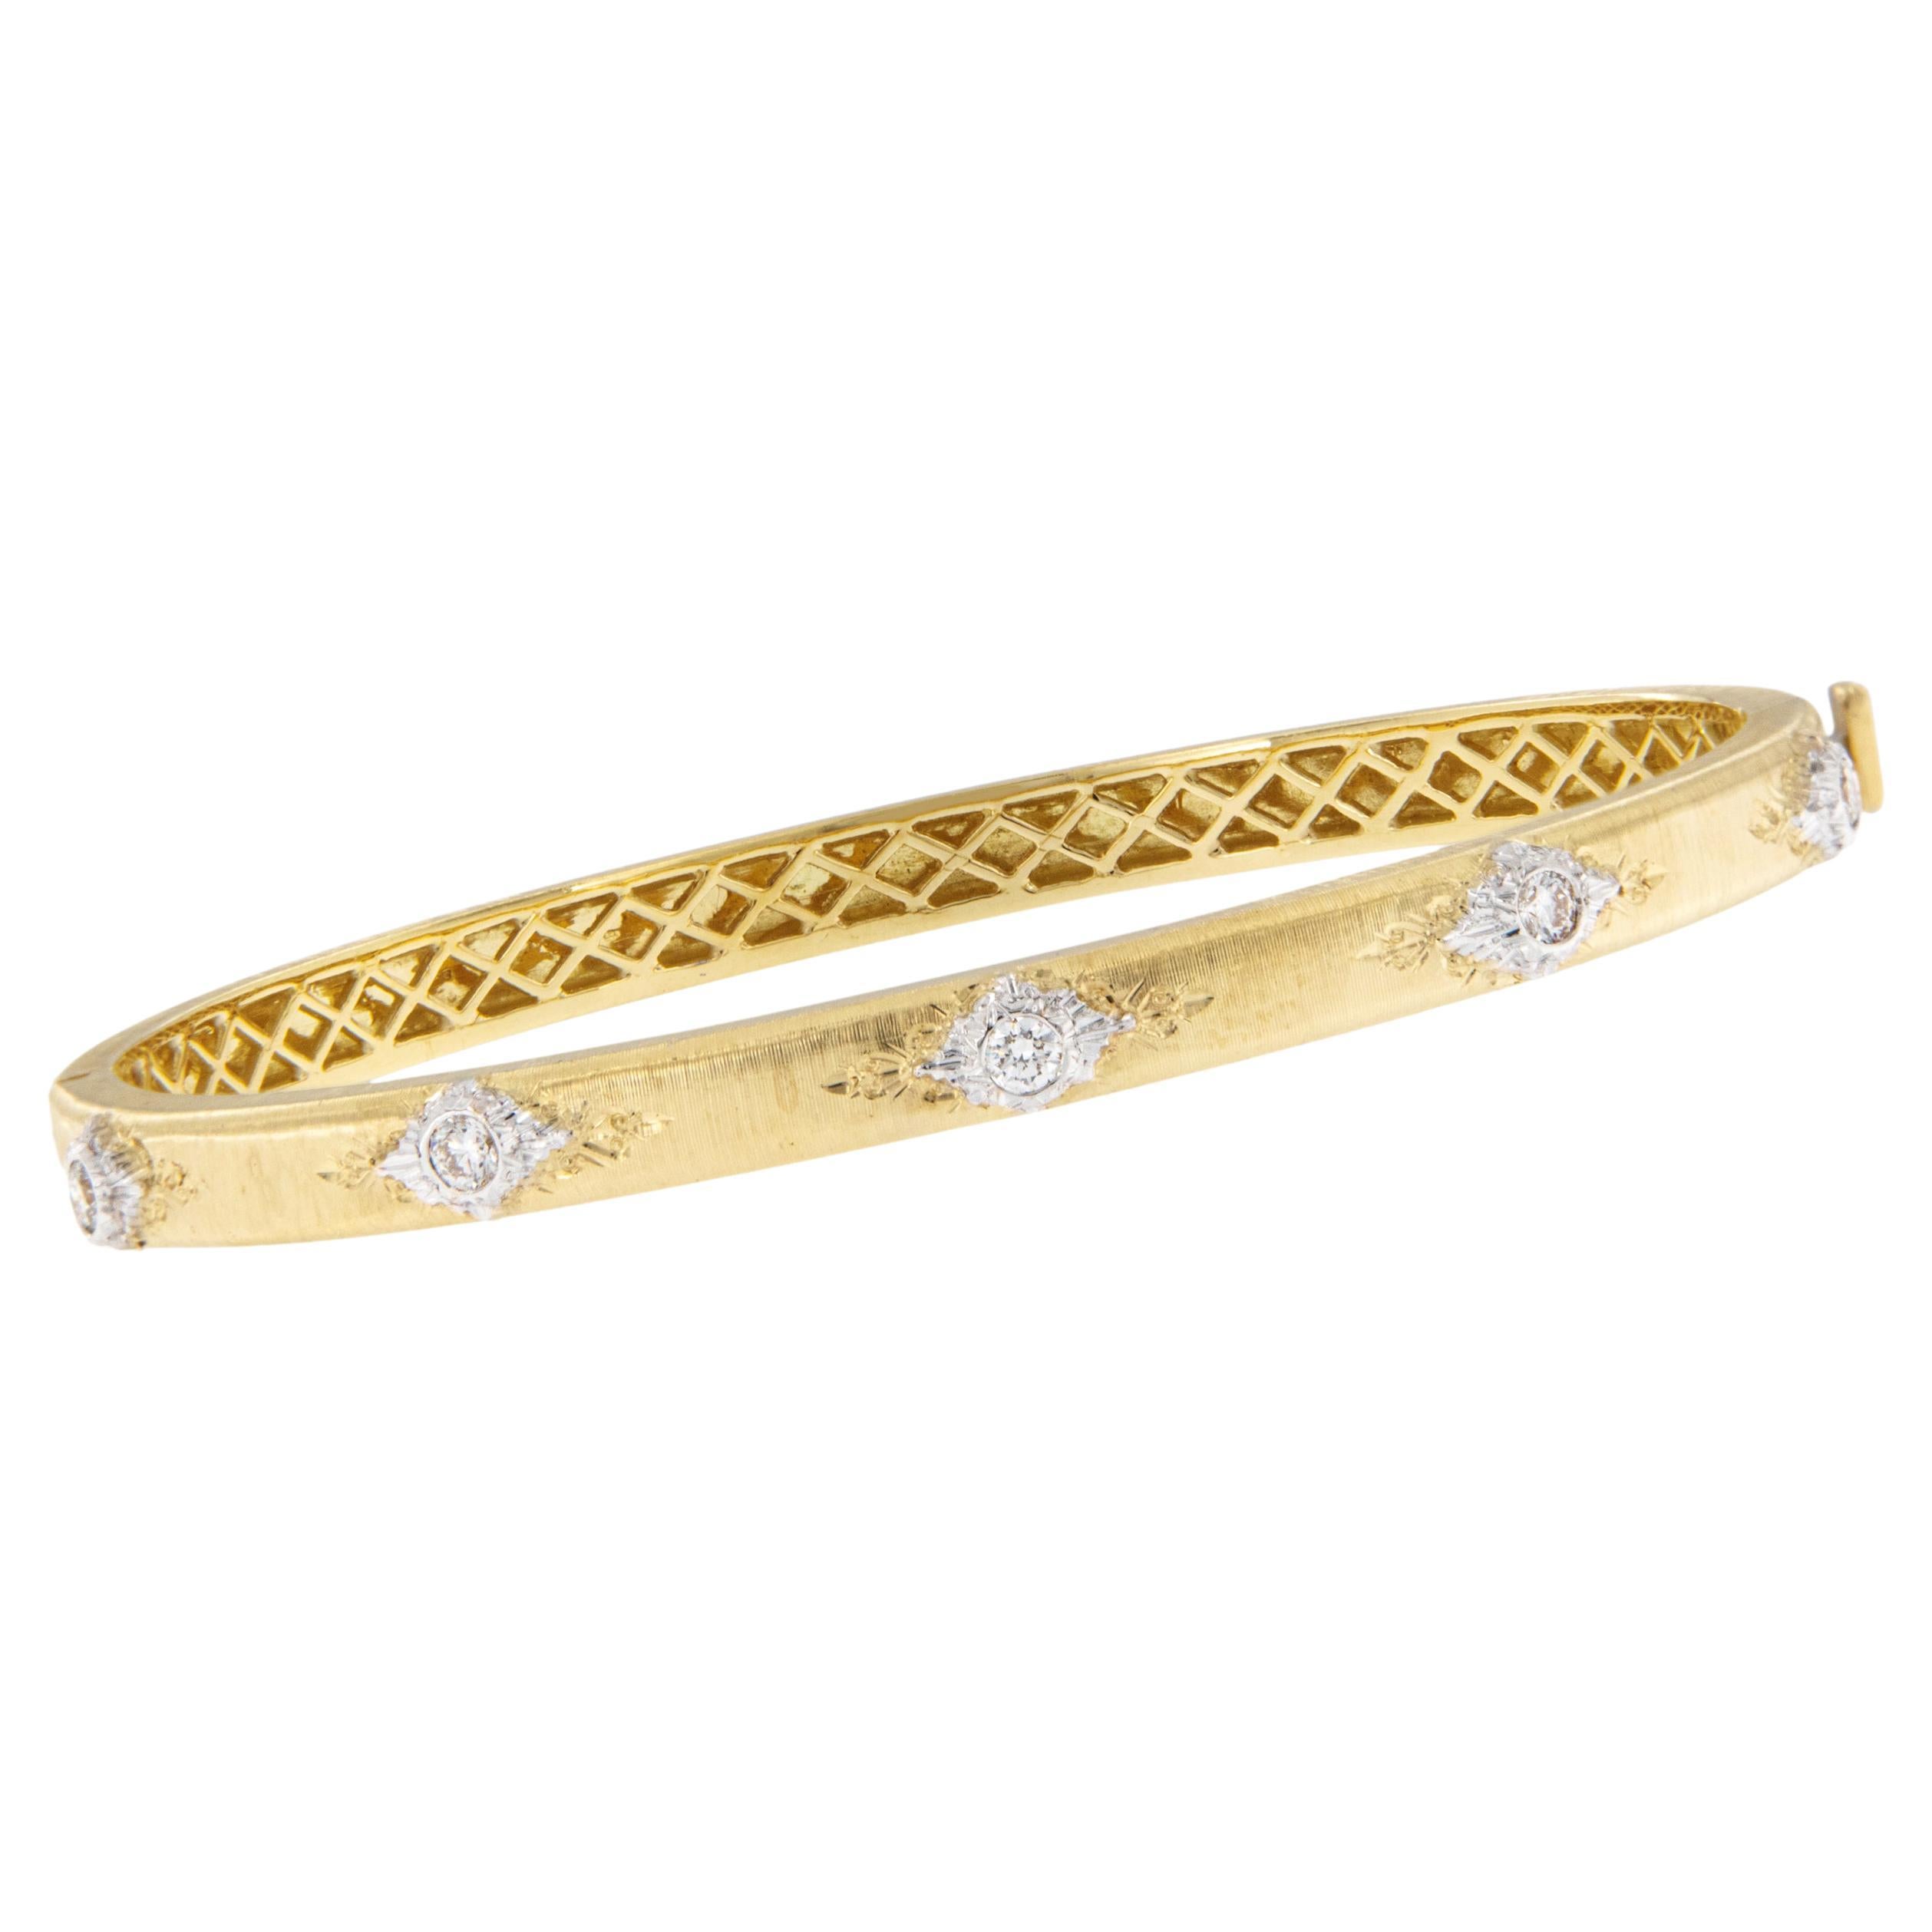 Made in Italy 18 Karat Yellow Gold Florentine Finish Diamond Bangle Bracelet